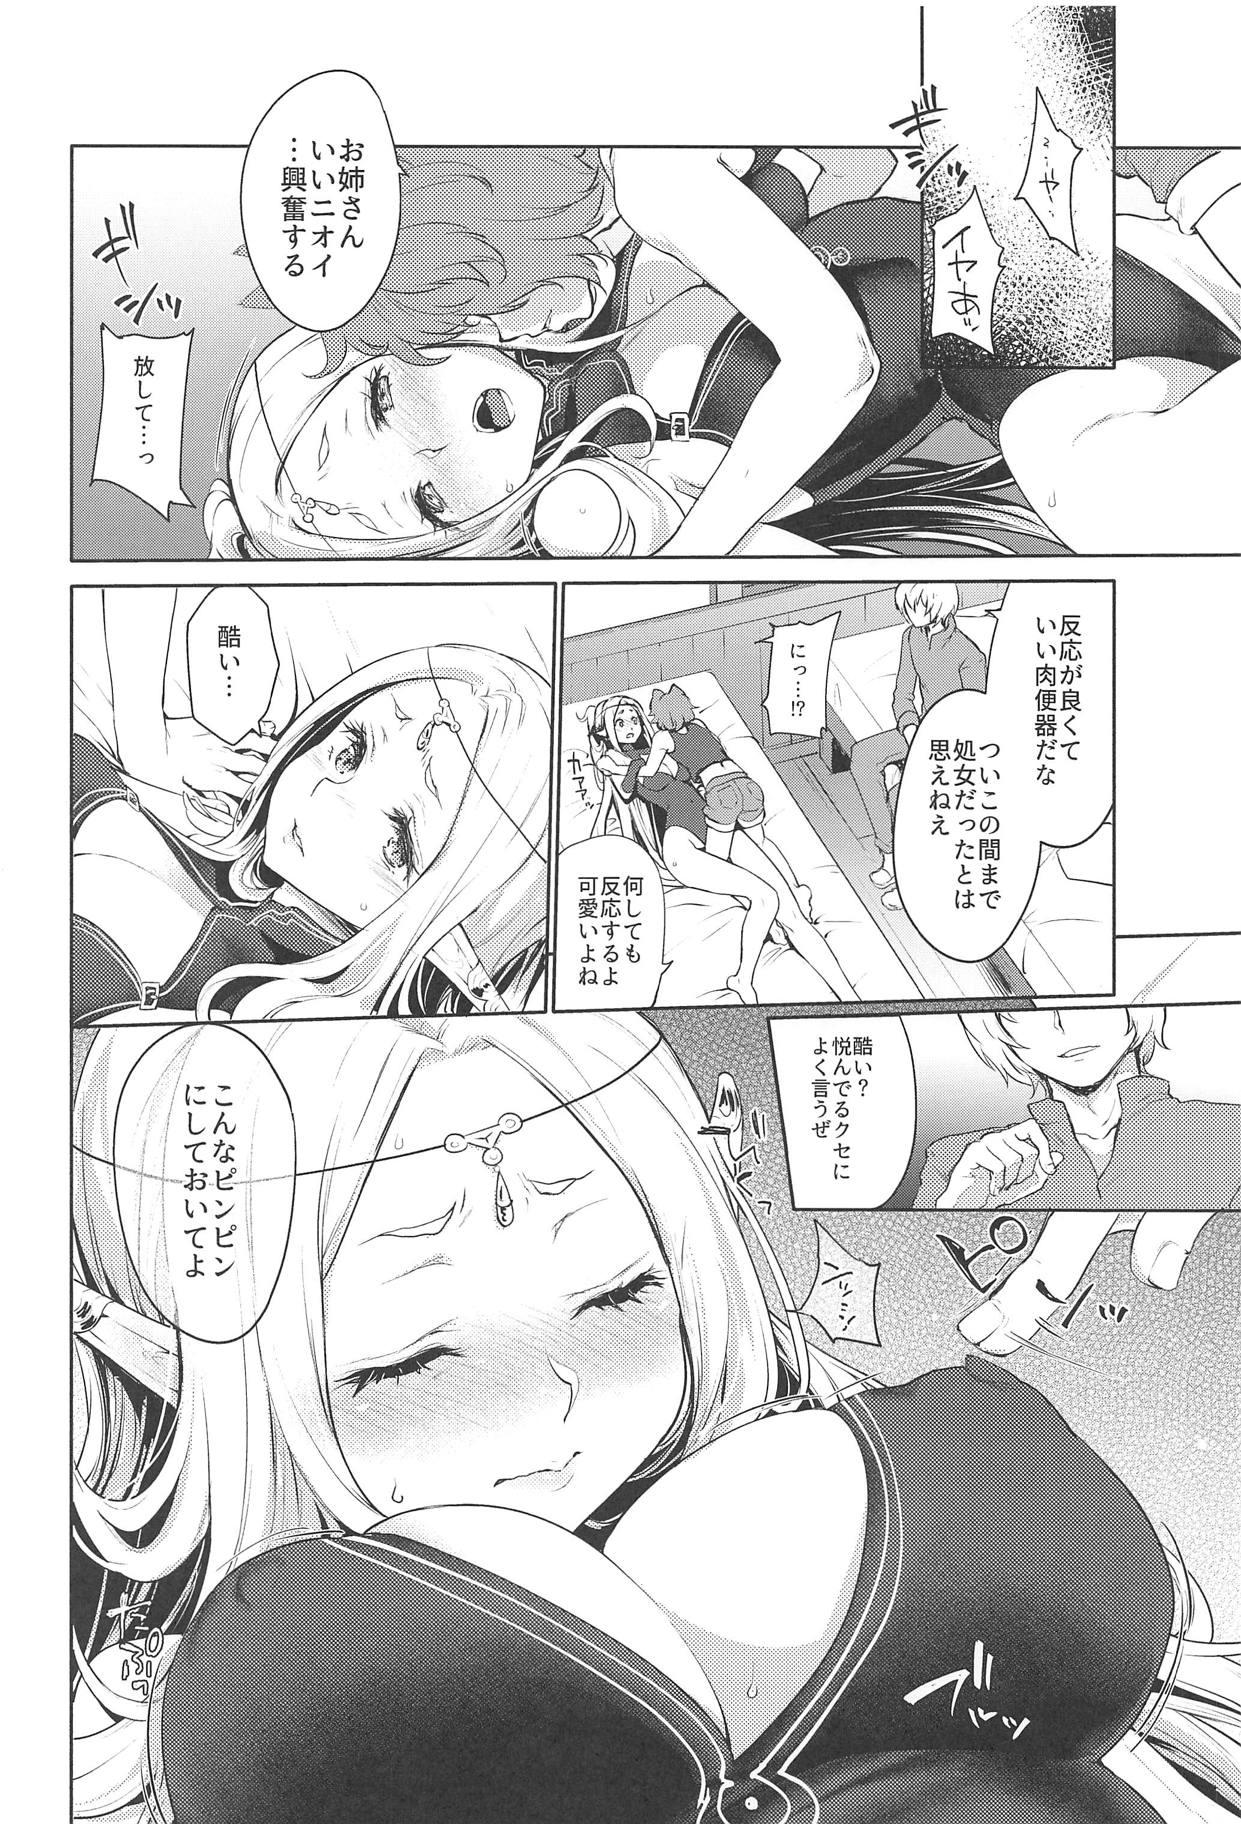 Girlsfucking Hajimete no Sekaiju 1.5 - Etrian odyssey Style - Page 3